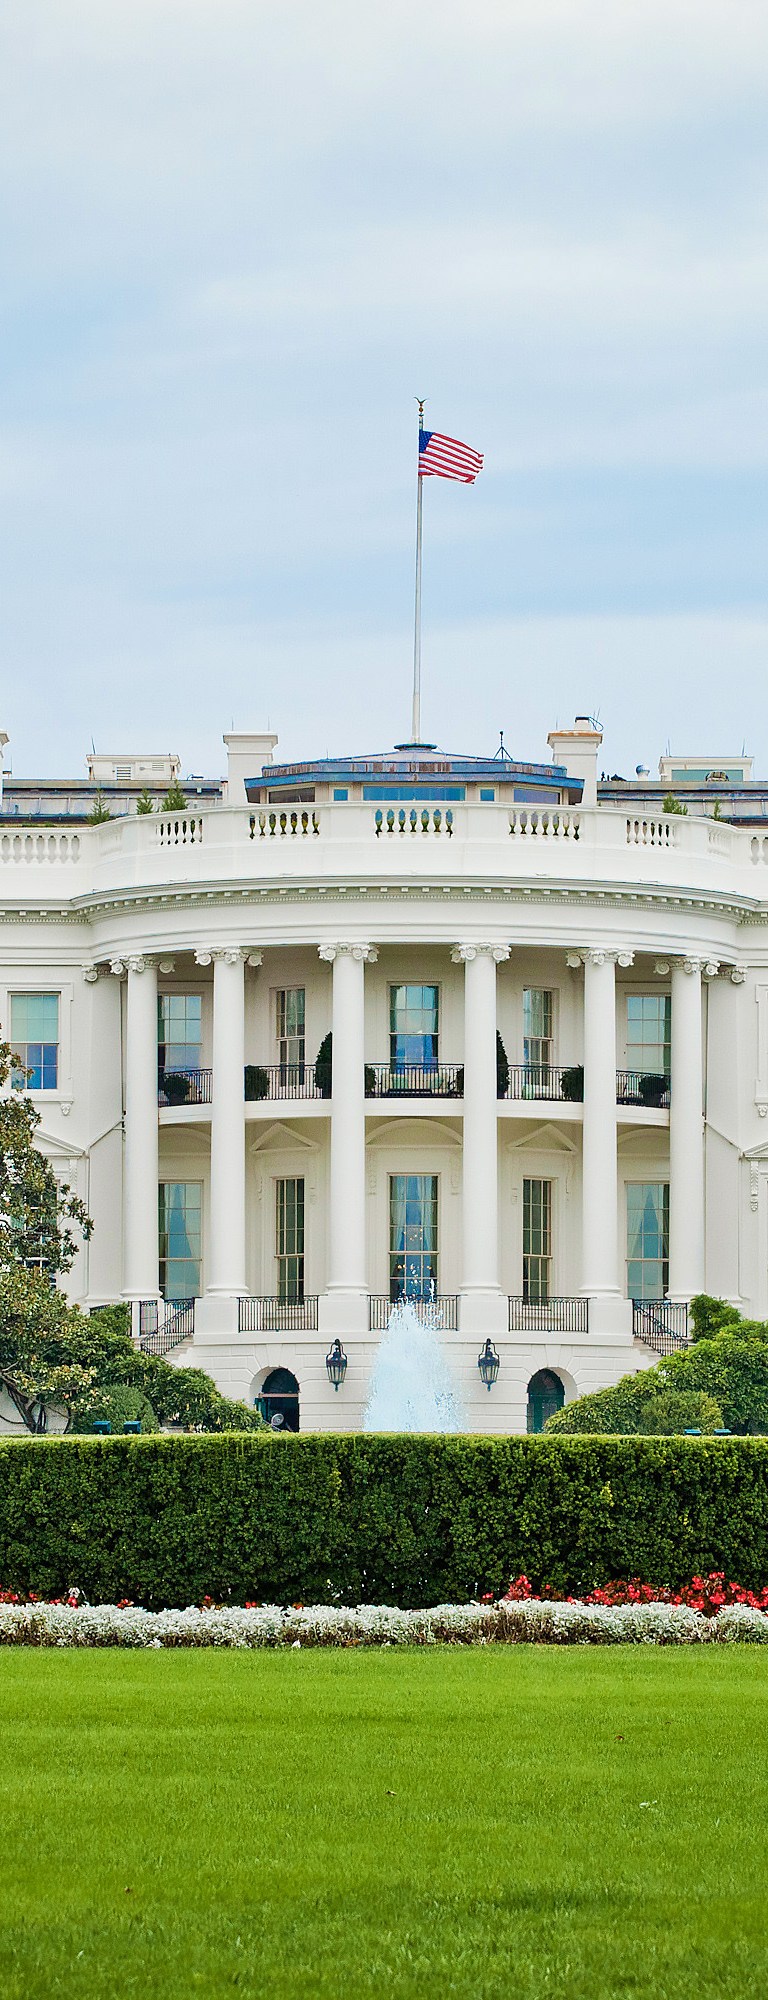 The White House, Washington DC (Shutterstock)